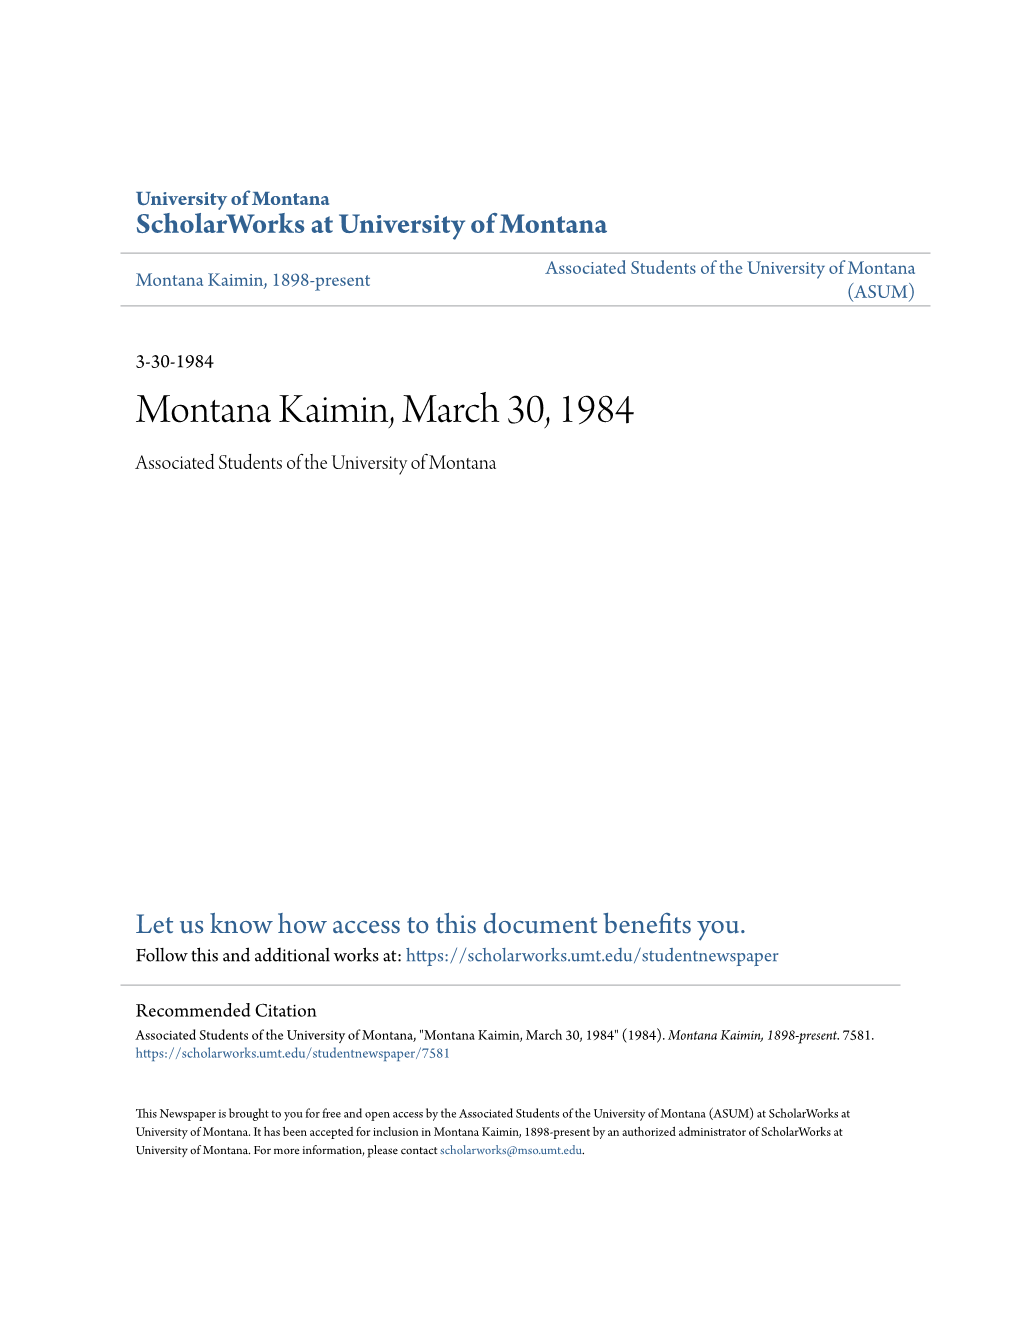 Montana Kaimin, March 30, 1984 Associated Students of the University of Montana